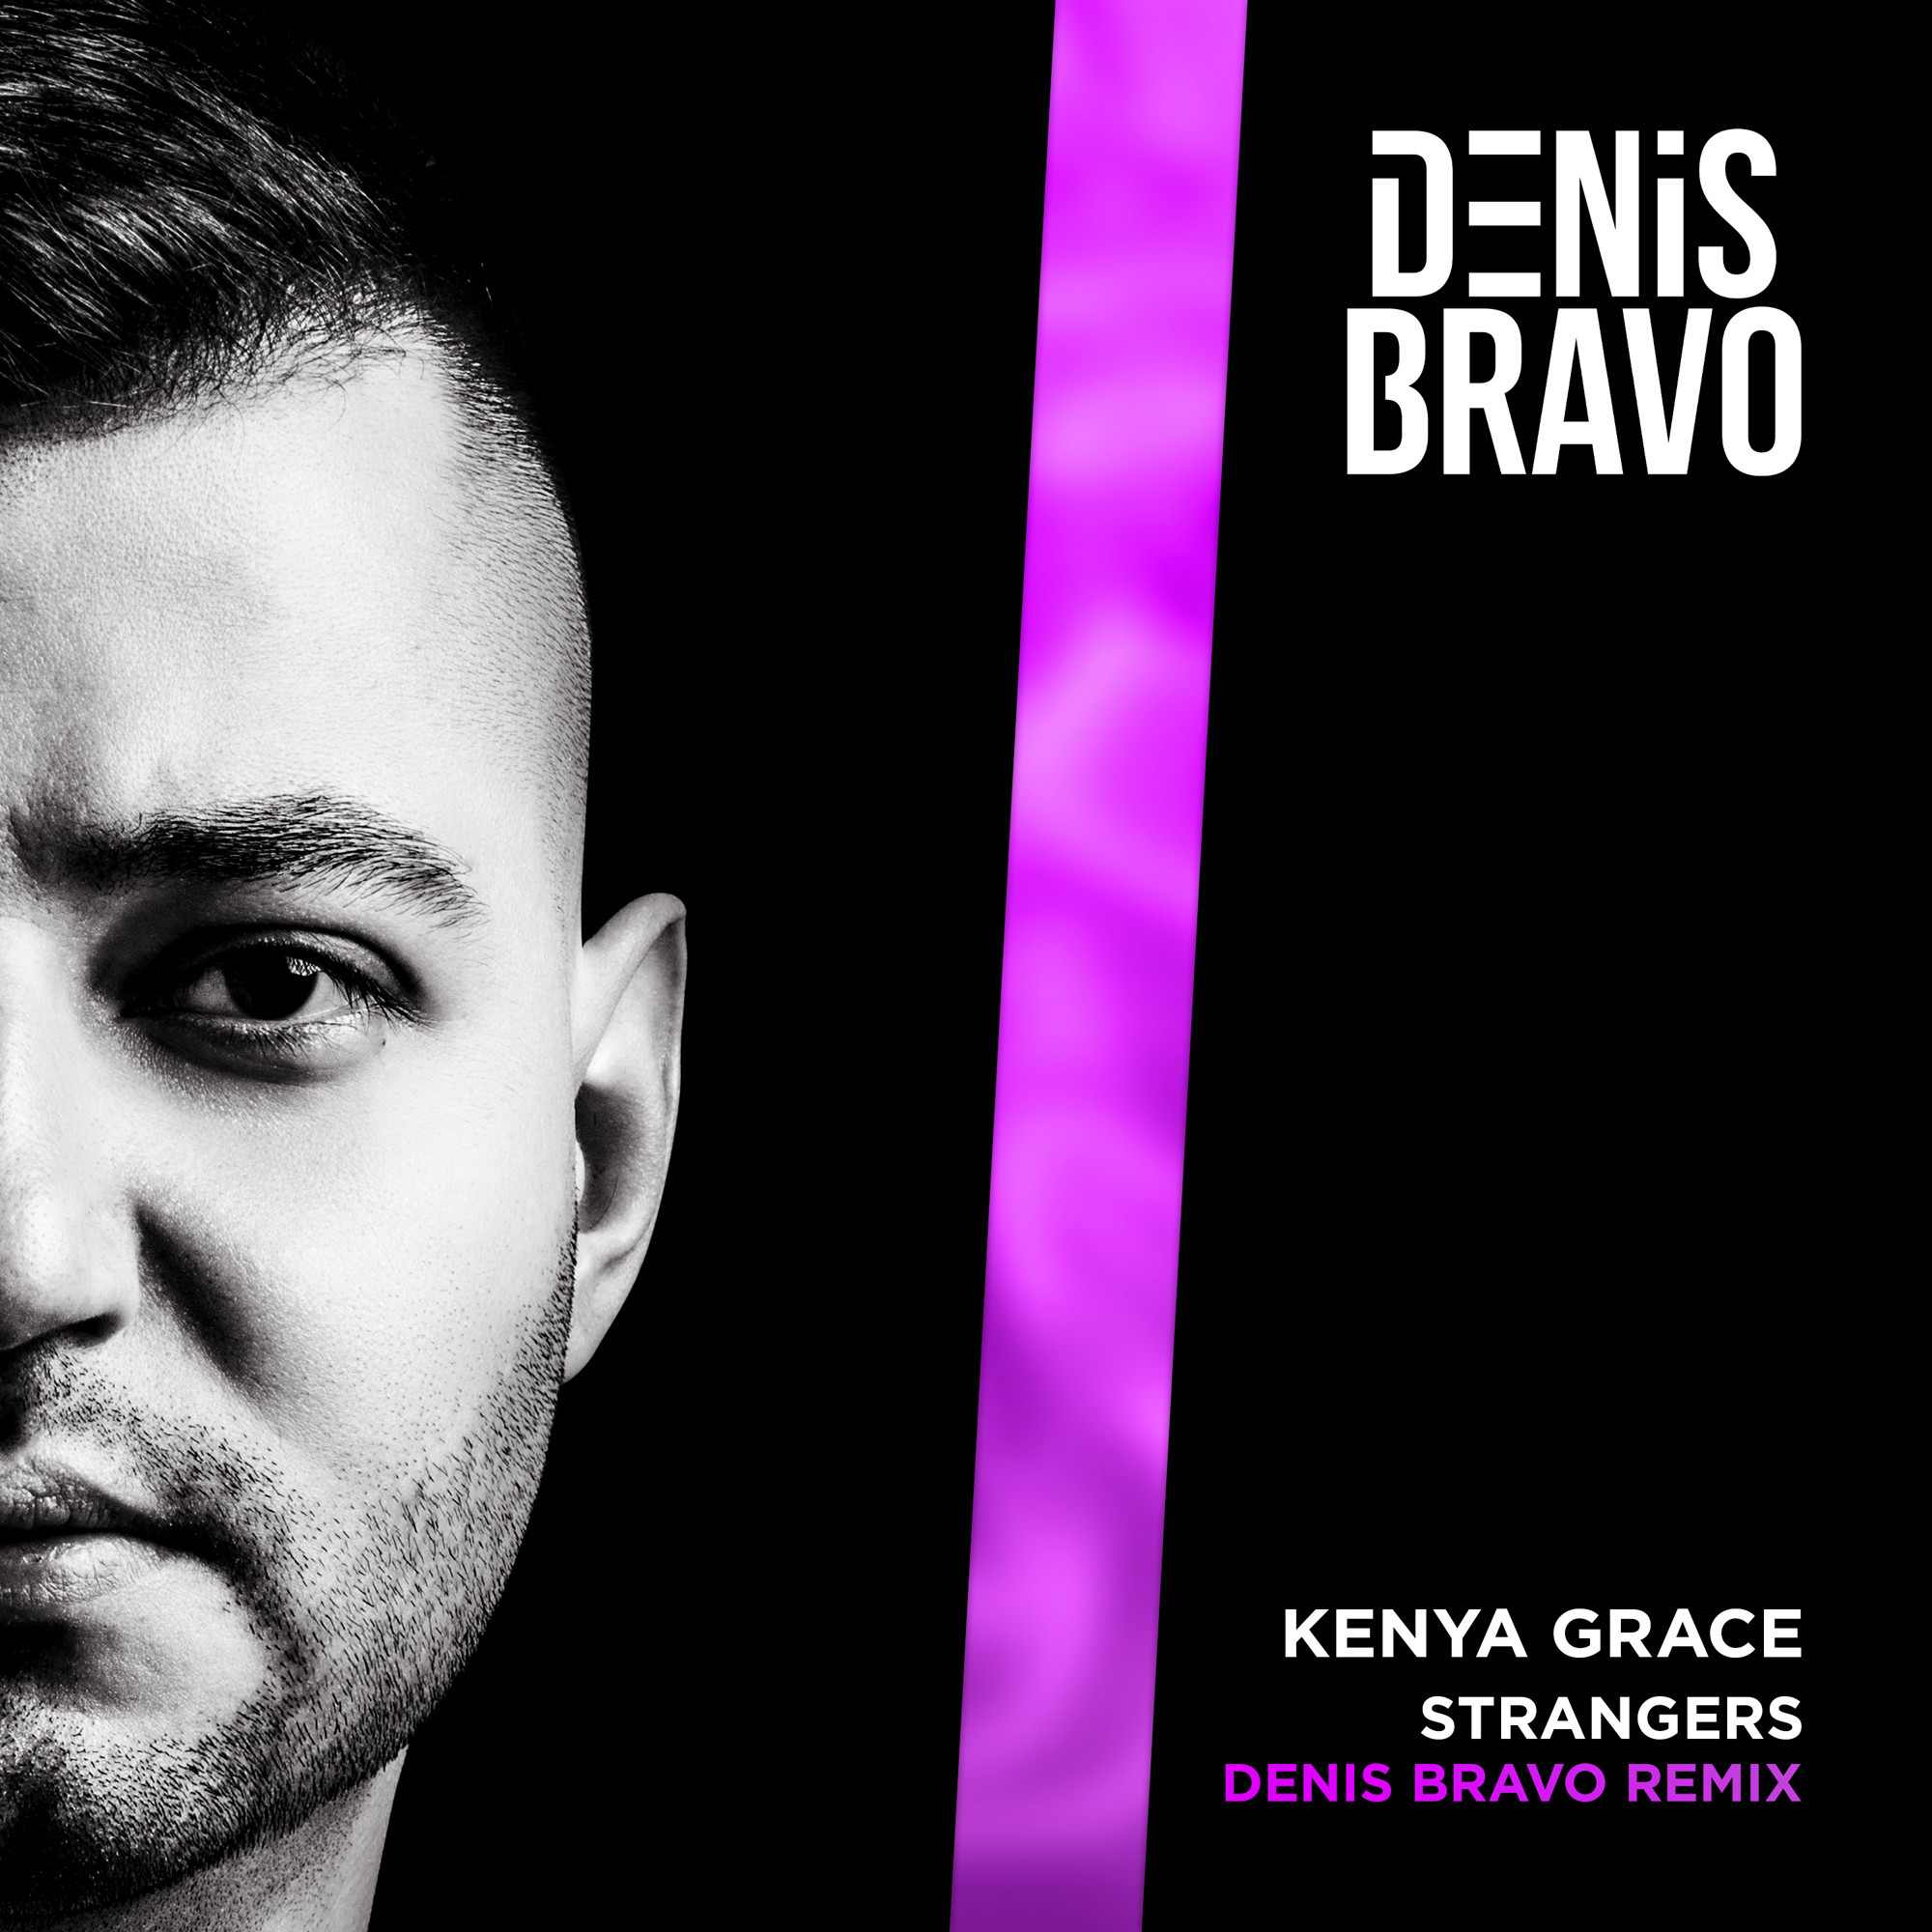 Грейс strangers. Кения Грейс strangers. Вирус - т.м.н.и (Denis Bravo Remix). Strangers Mixed Kenya Grace. Kenya Grace strangers mp3.